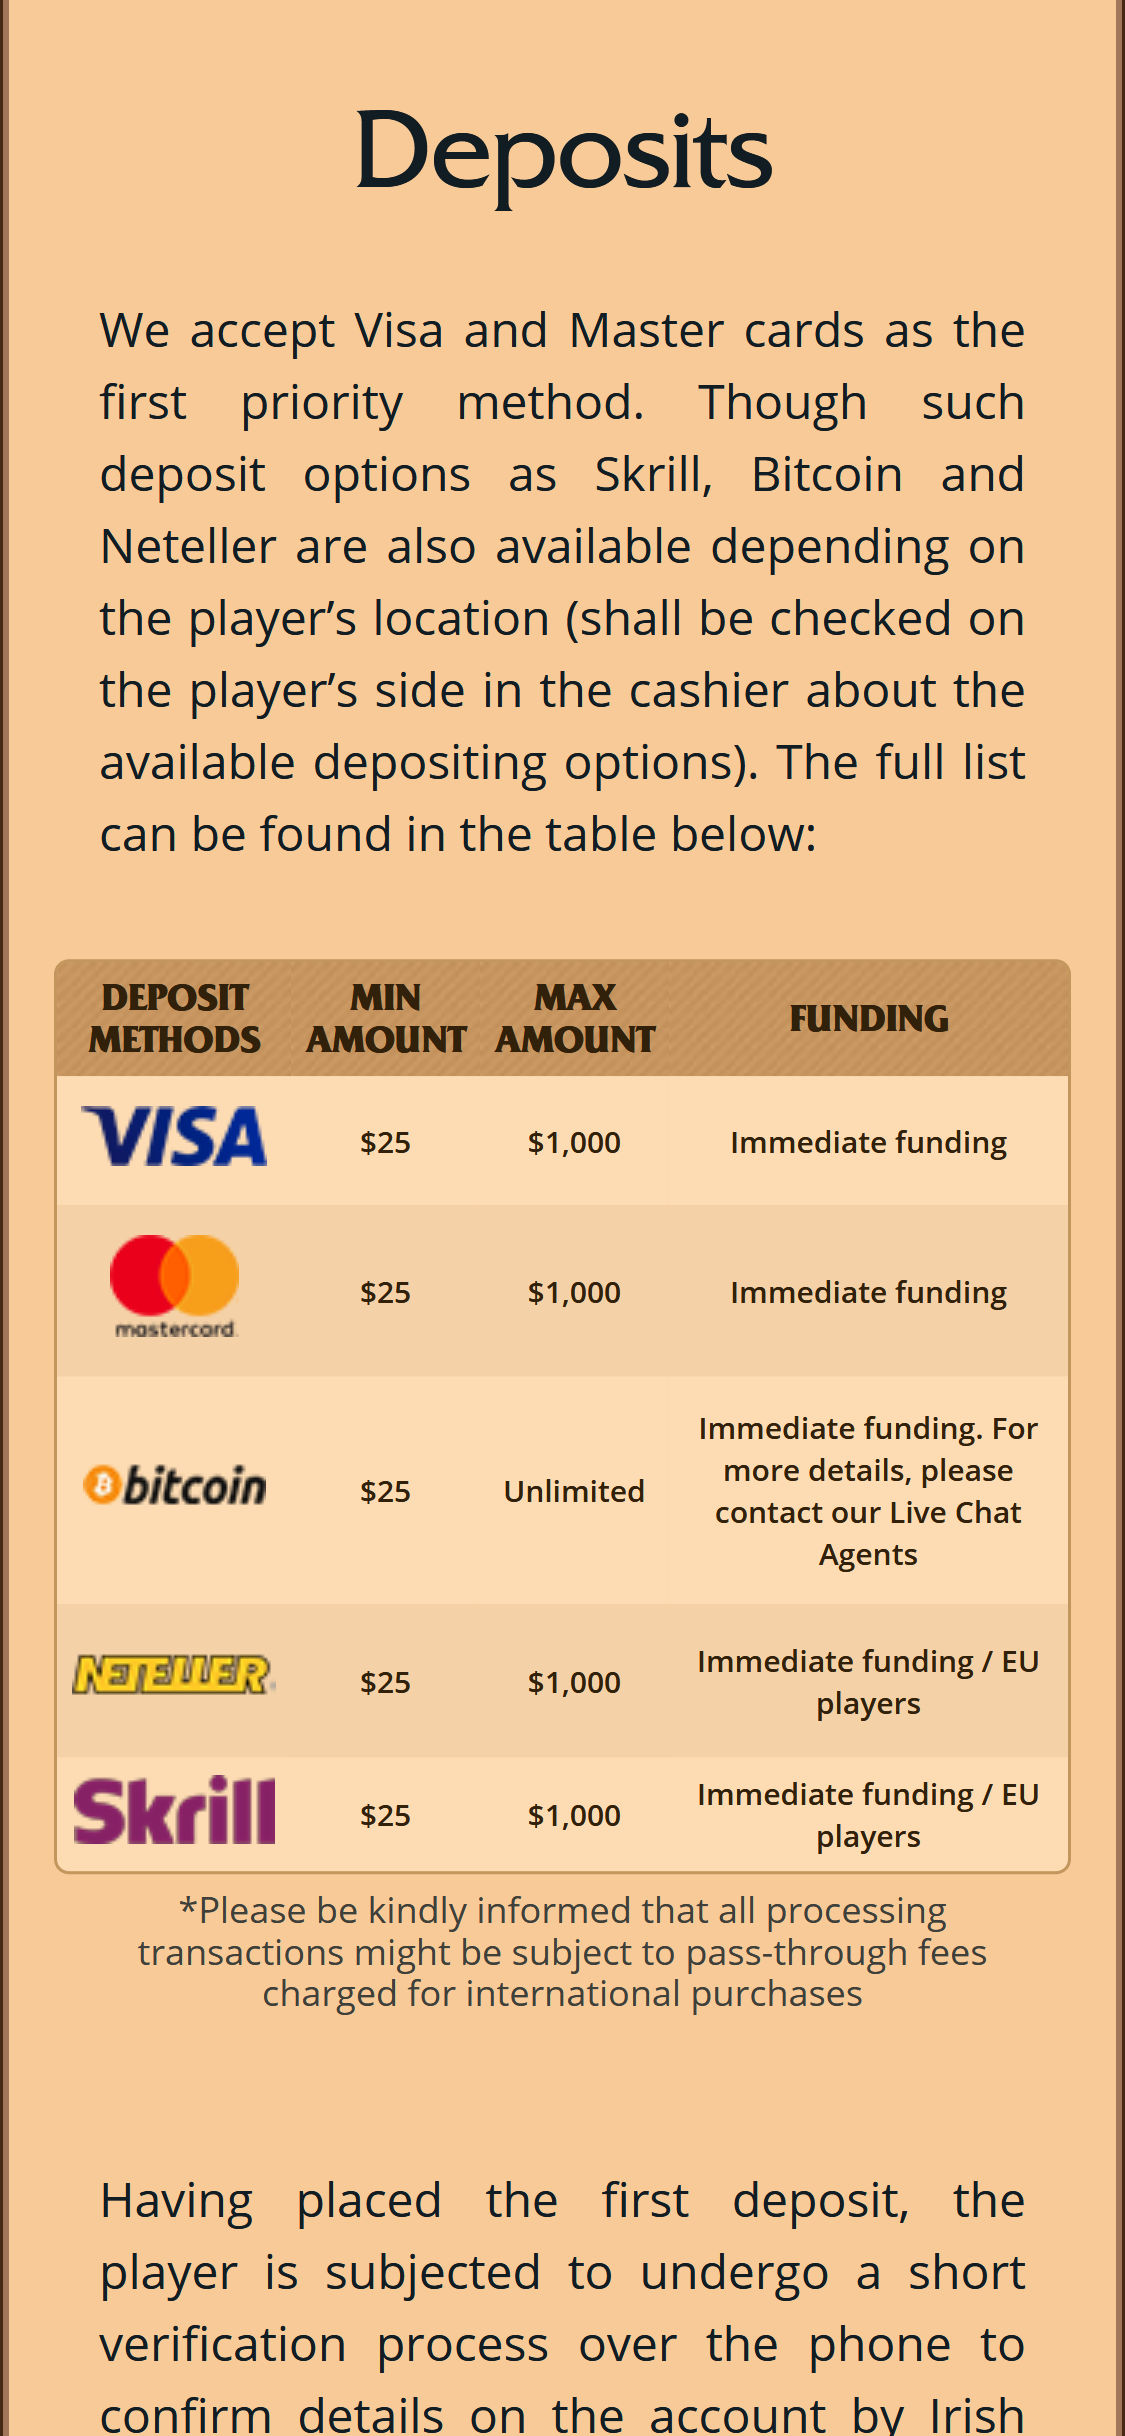 IrishLuck Casino Mobile Payment Methods Review